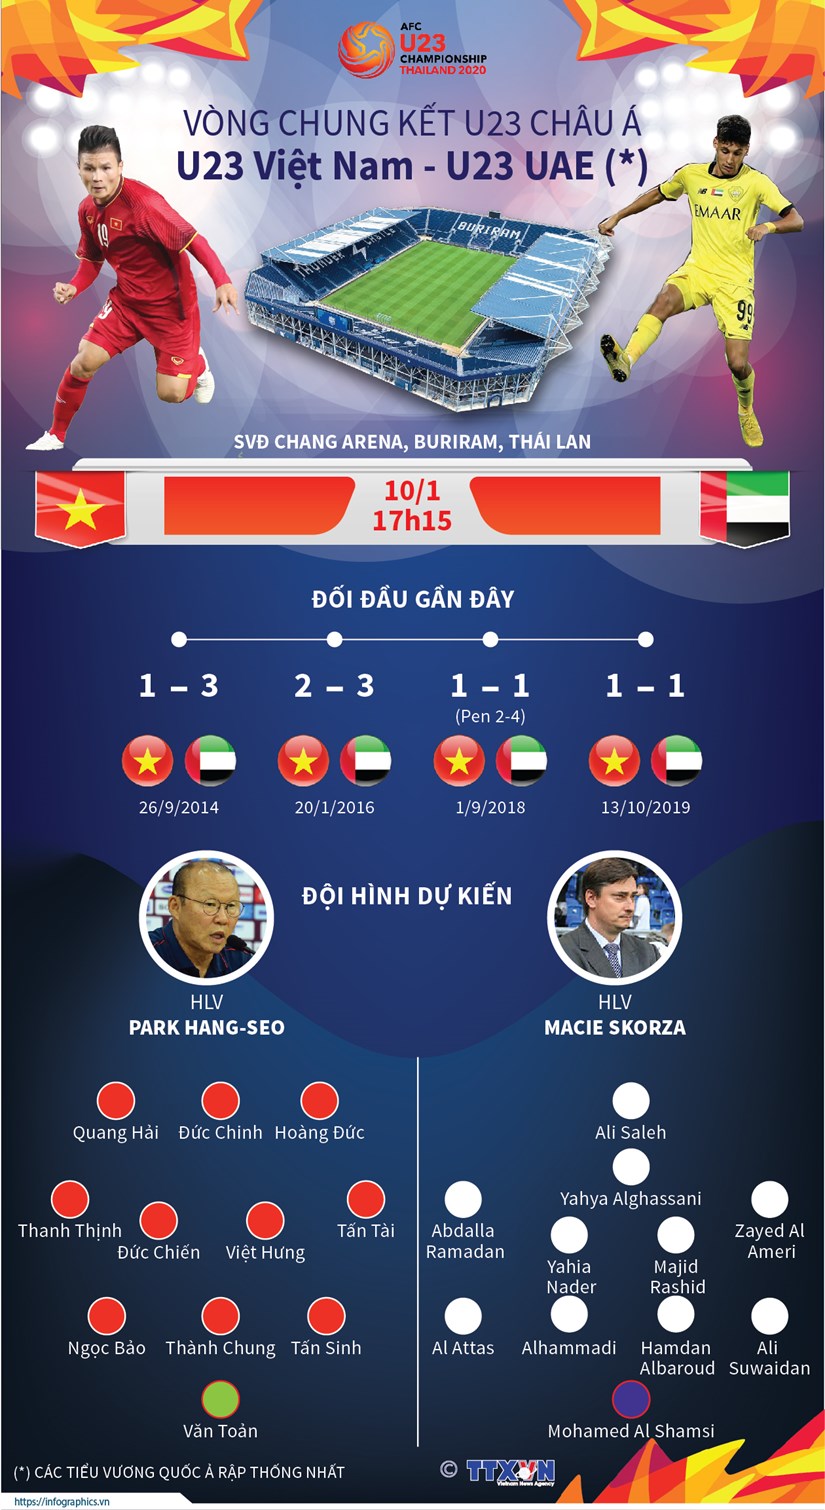 [Infographics] Vong chung ket U23 chau A: U23 Viet Nam-U23 UAE hinh anh 1